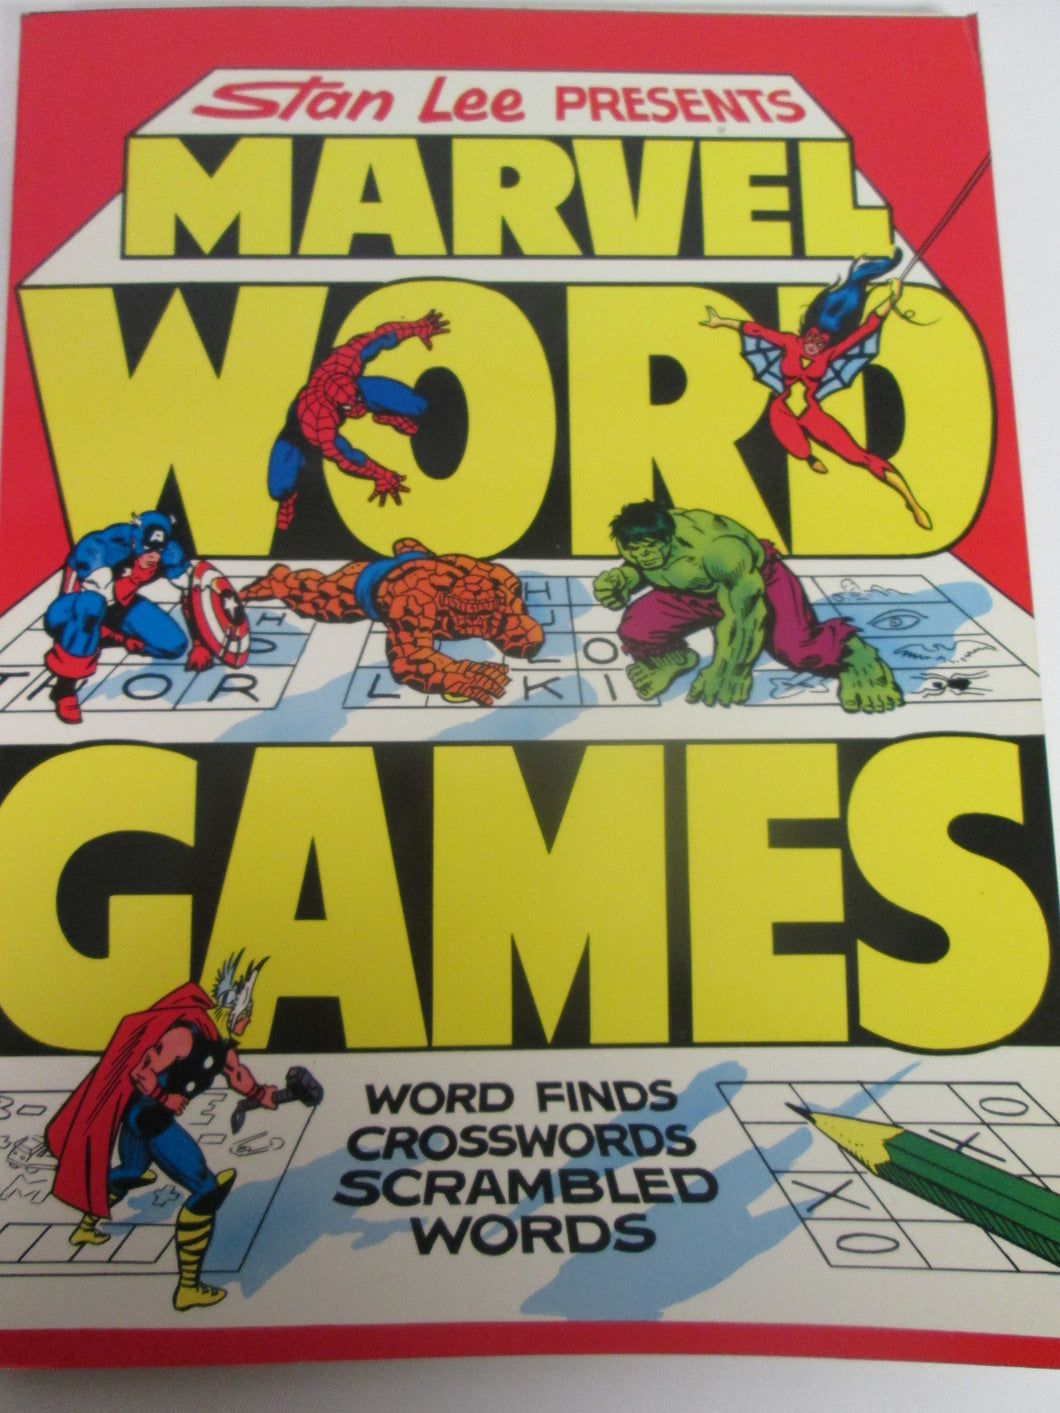 Stan Lee Presents Marvel Word Games Word Finds Crossword scrambled Words 1979 PB